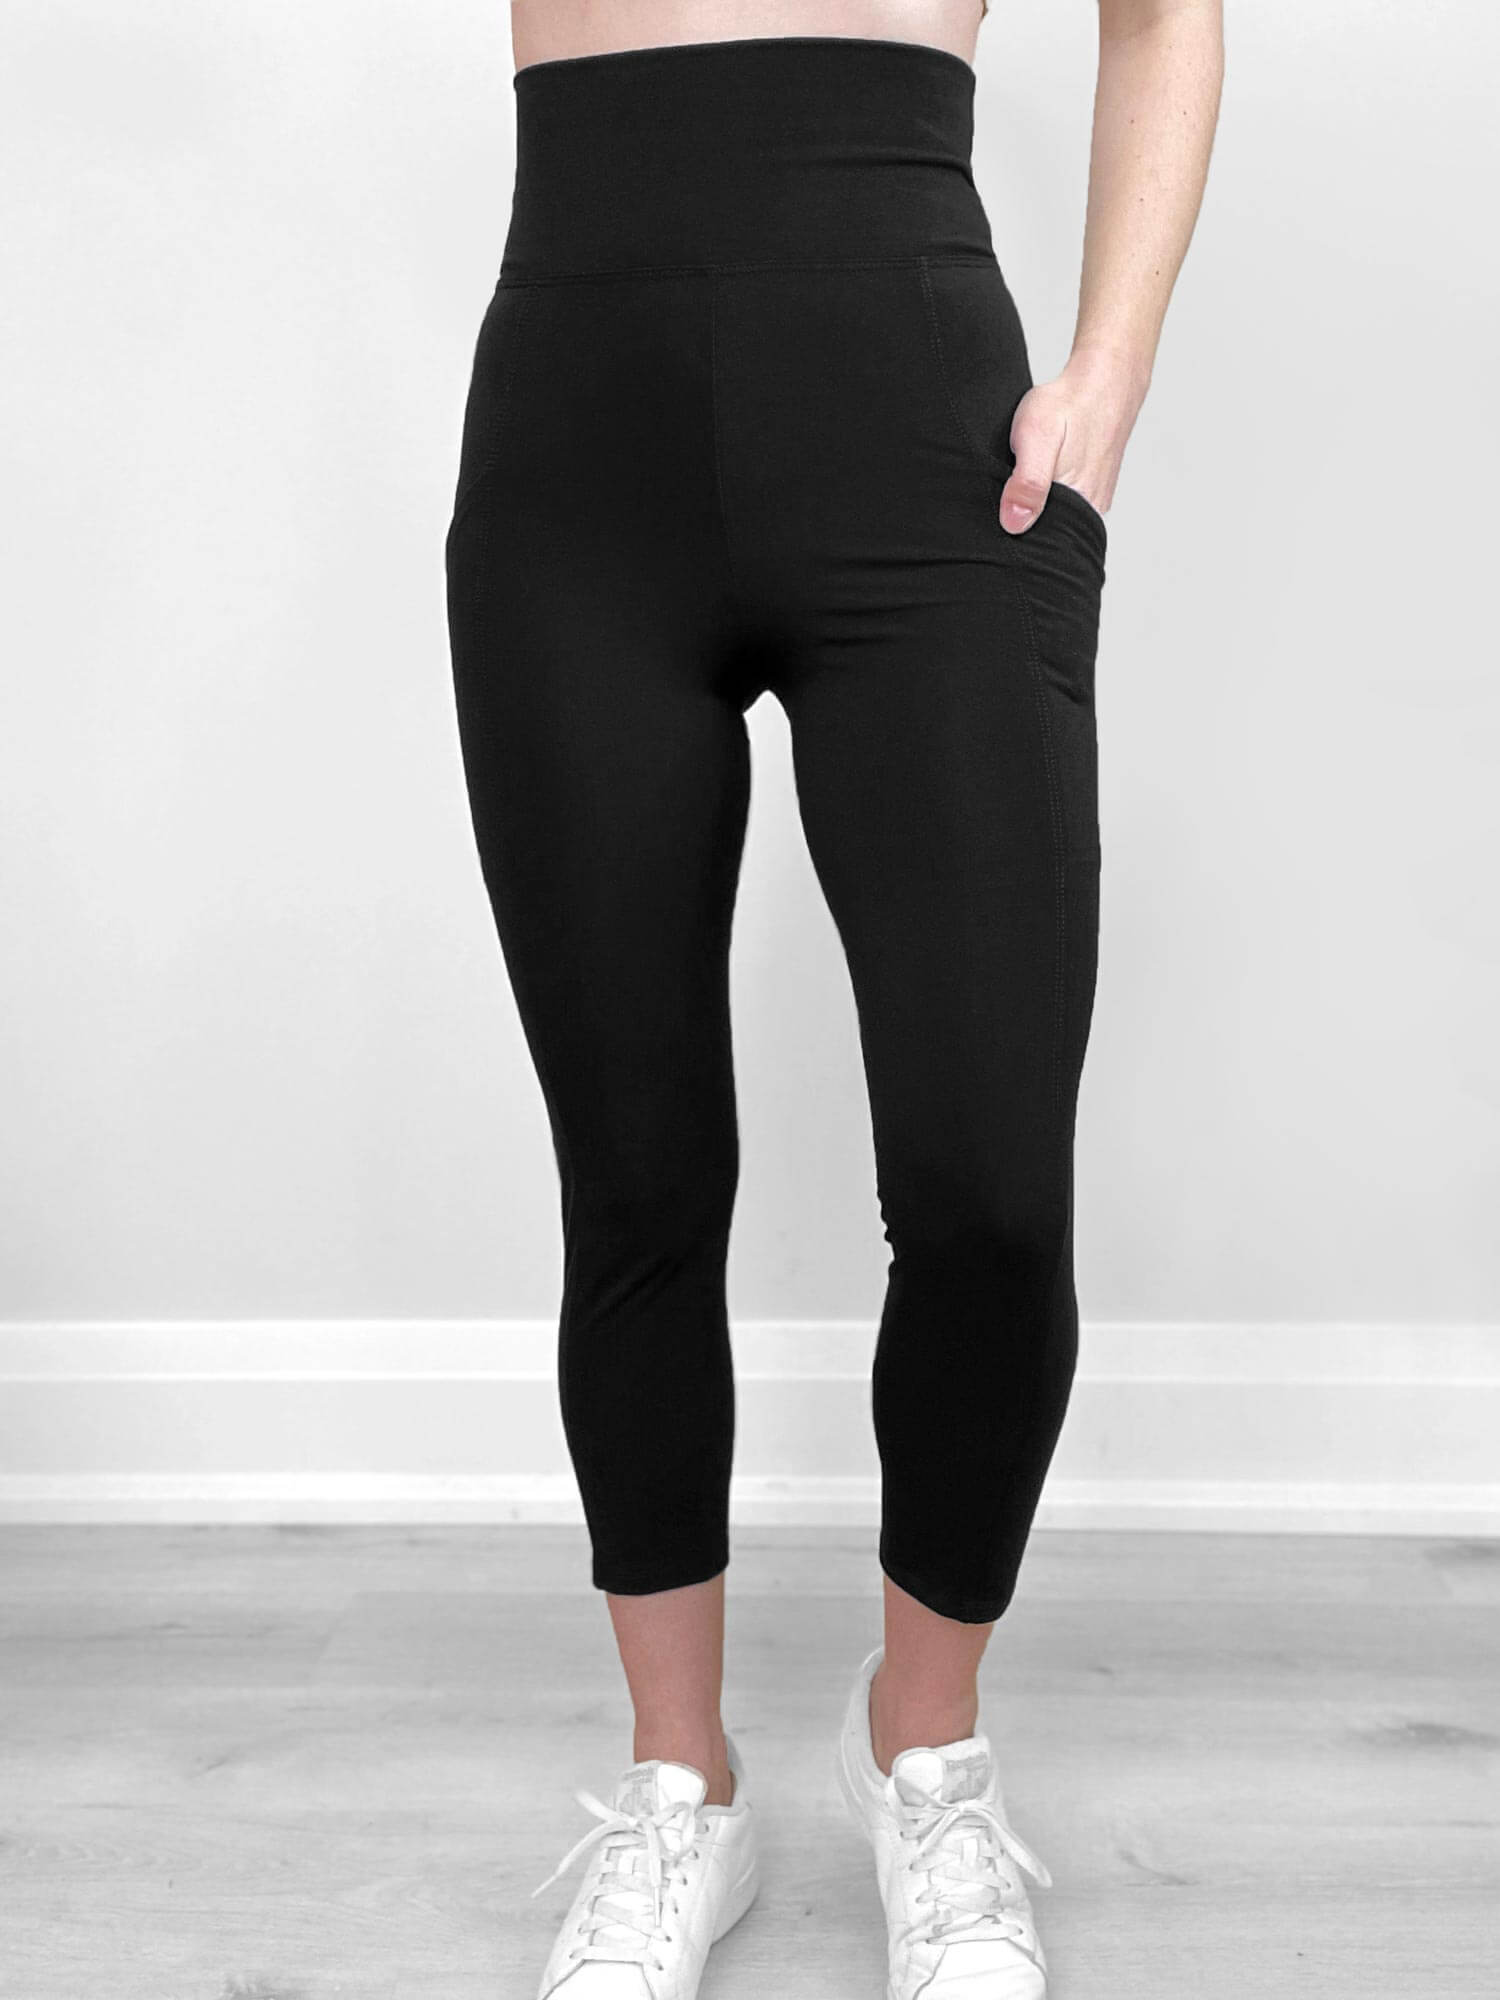 Black Cotton Spandex Capri Legging - Intouch Clothing